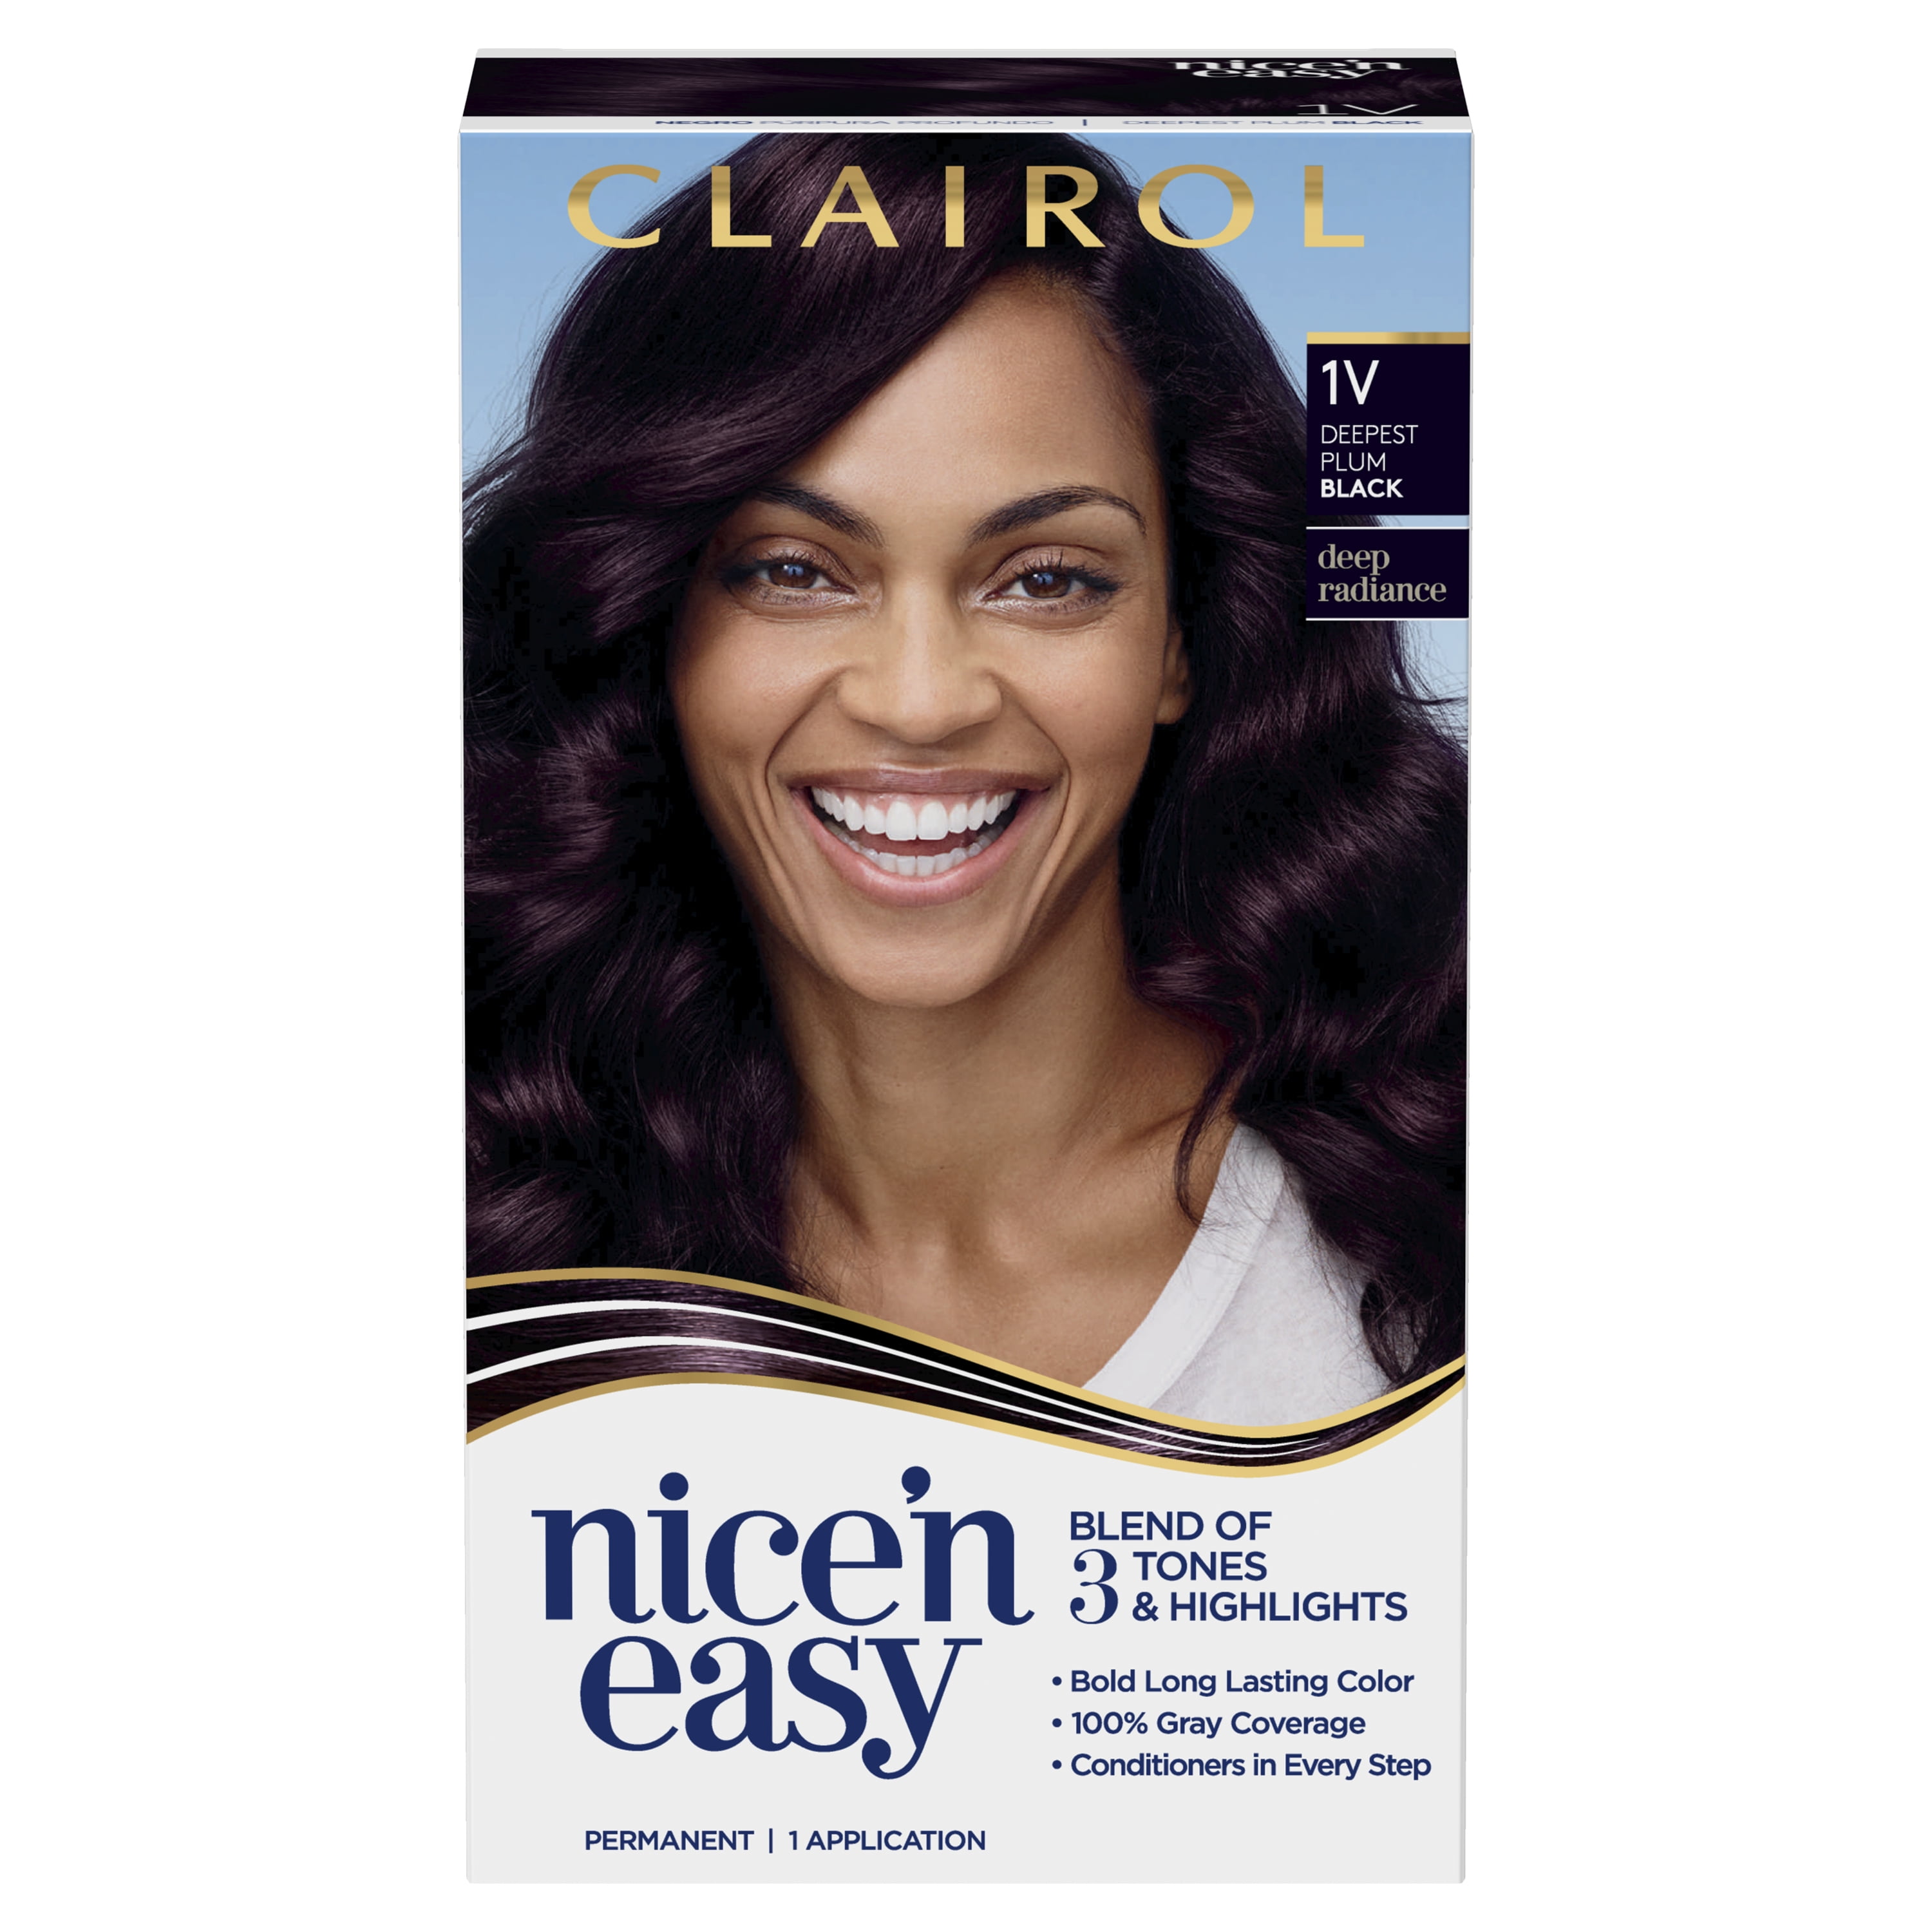 Clairol Nice'n Easy Permanent Hair Color Creme, 1V Deepest Plum Black, Hair  Dye, 1 Application - Walmart.com